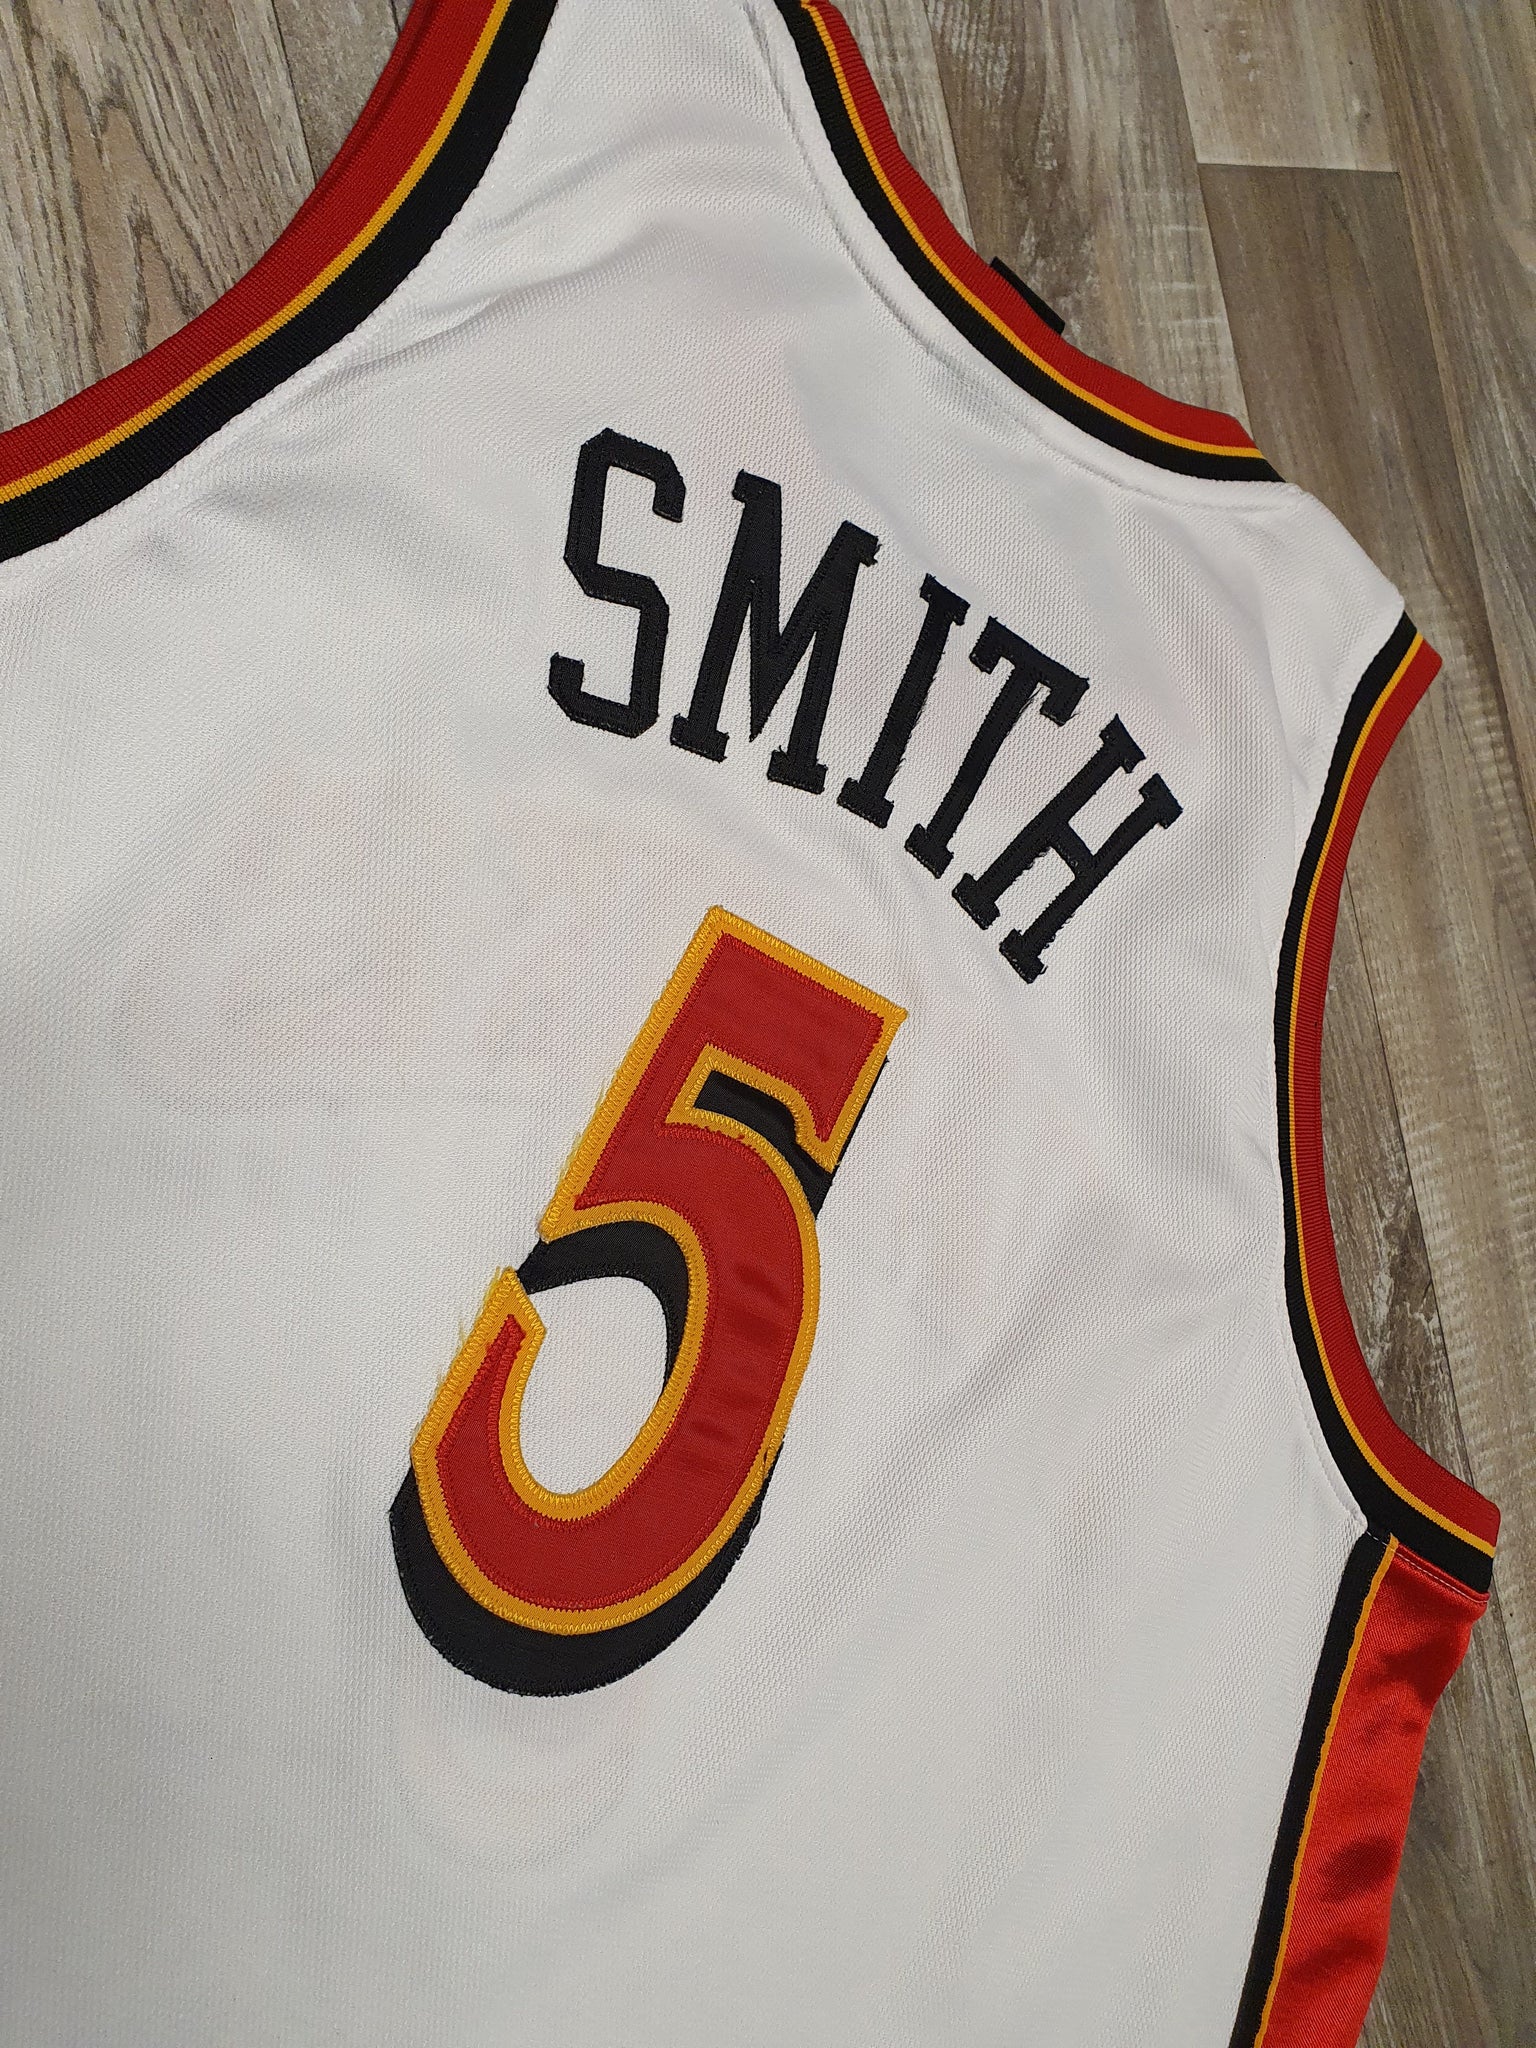 Adidas NBA Atlanta Hawks Josh Smith Basketball Jersey Sz S